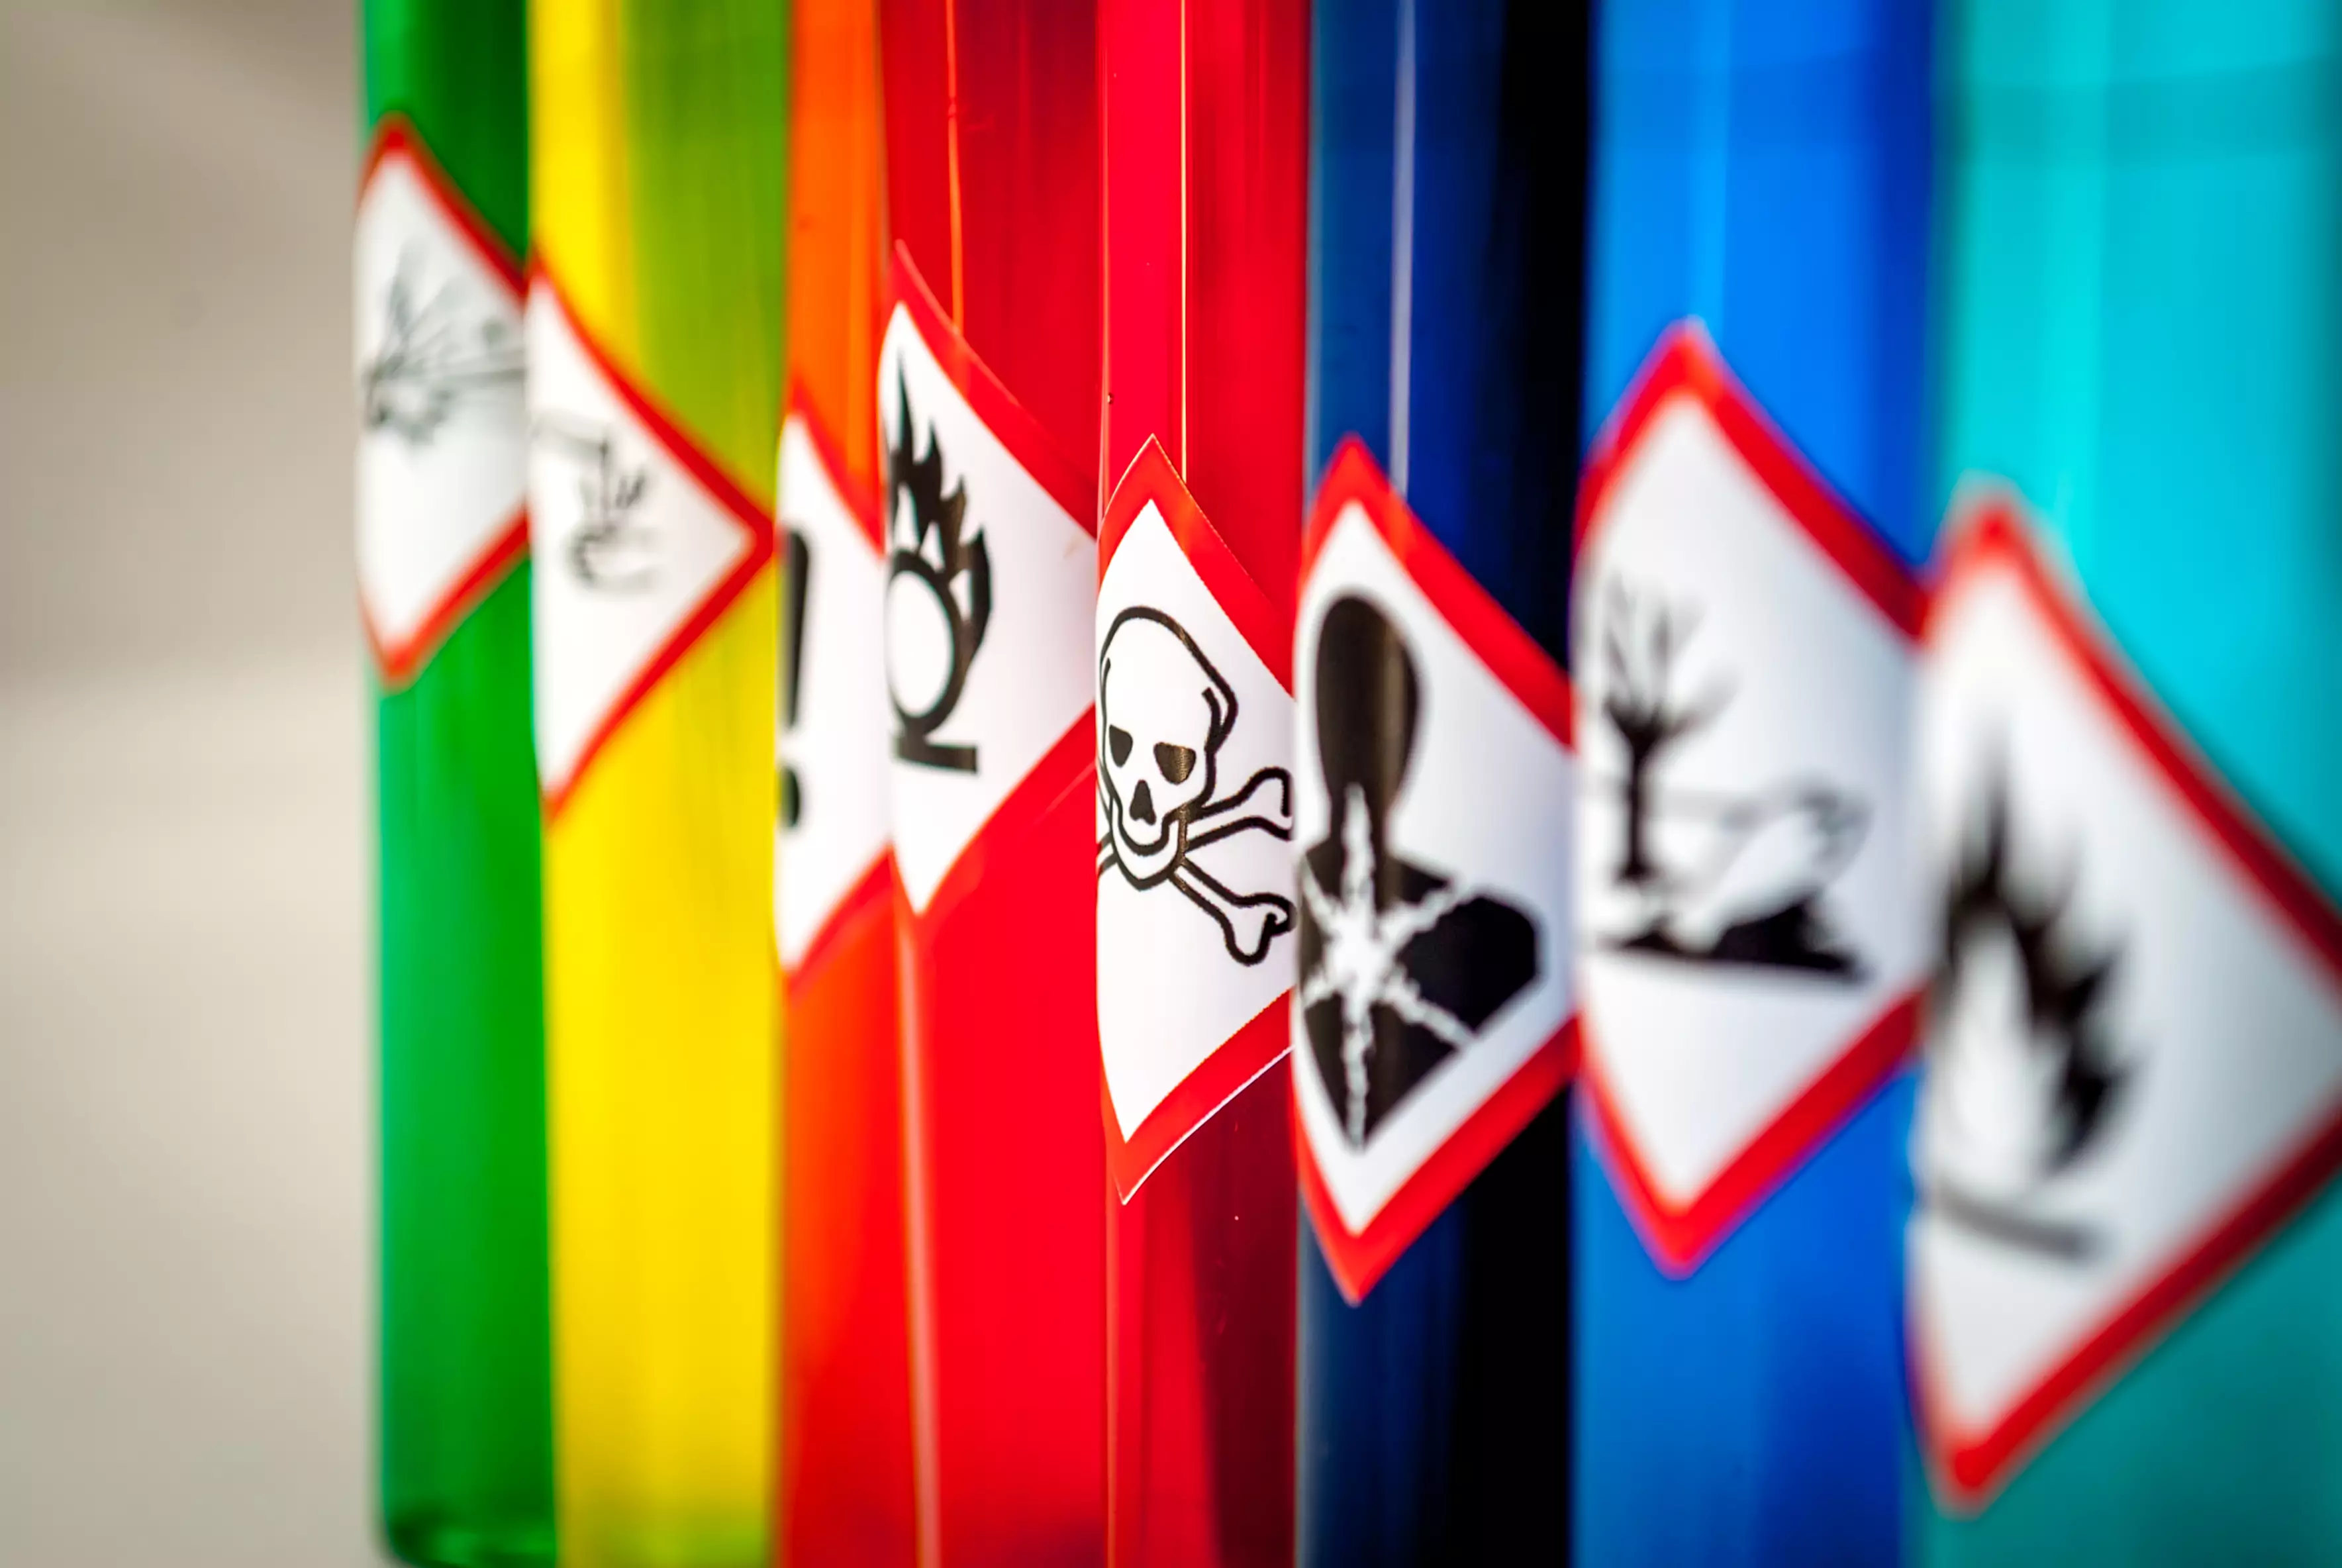 Chemical-hazard-pictograms-Toxic-focus